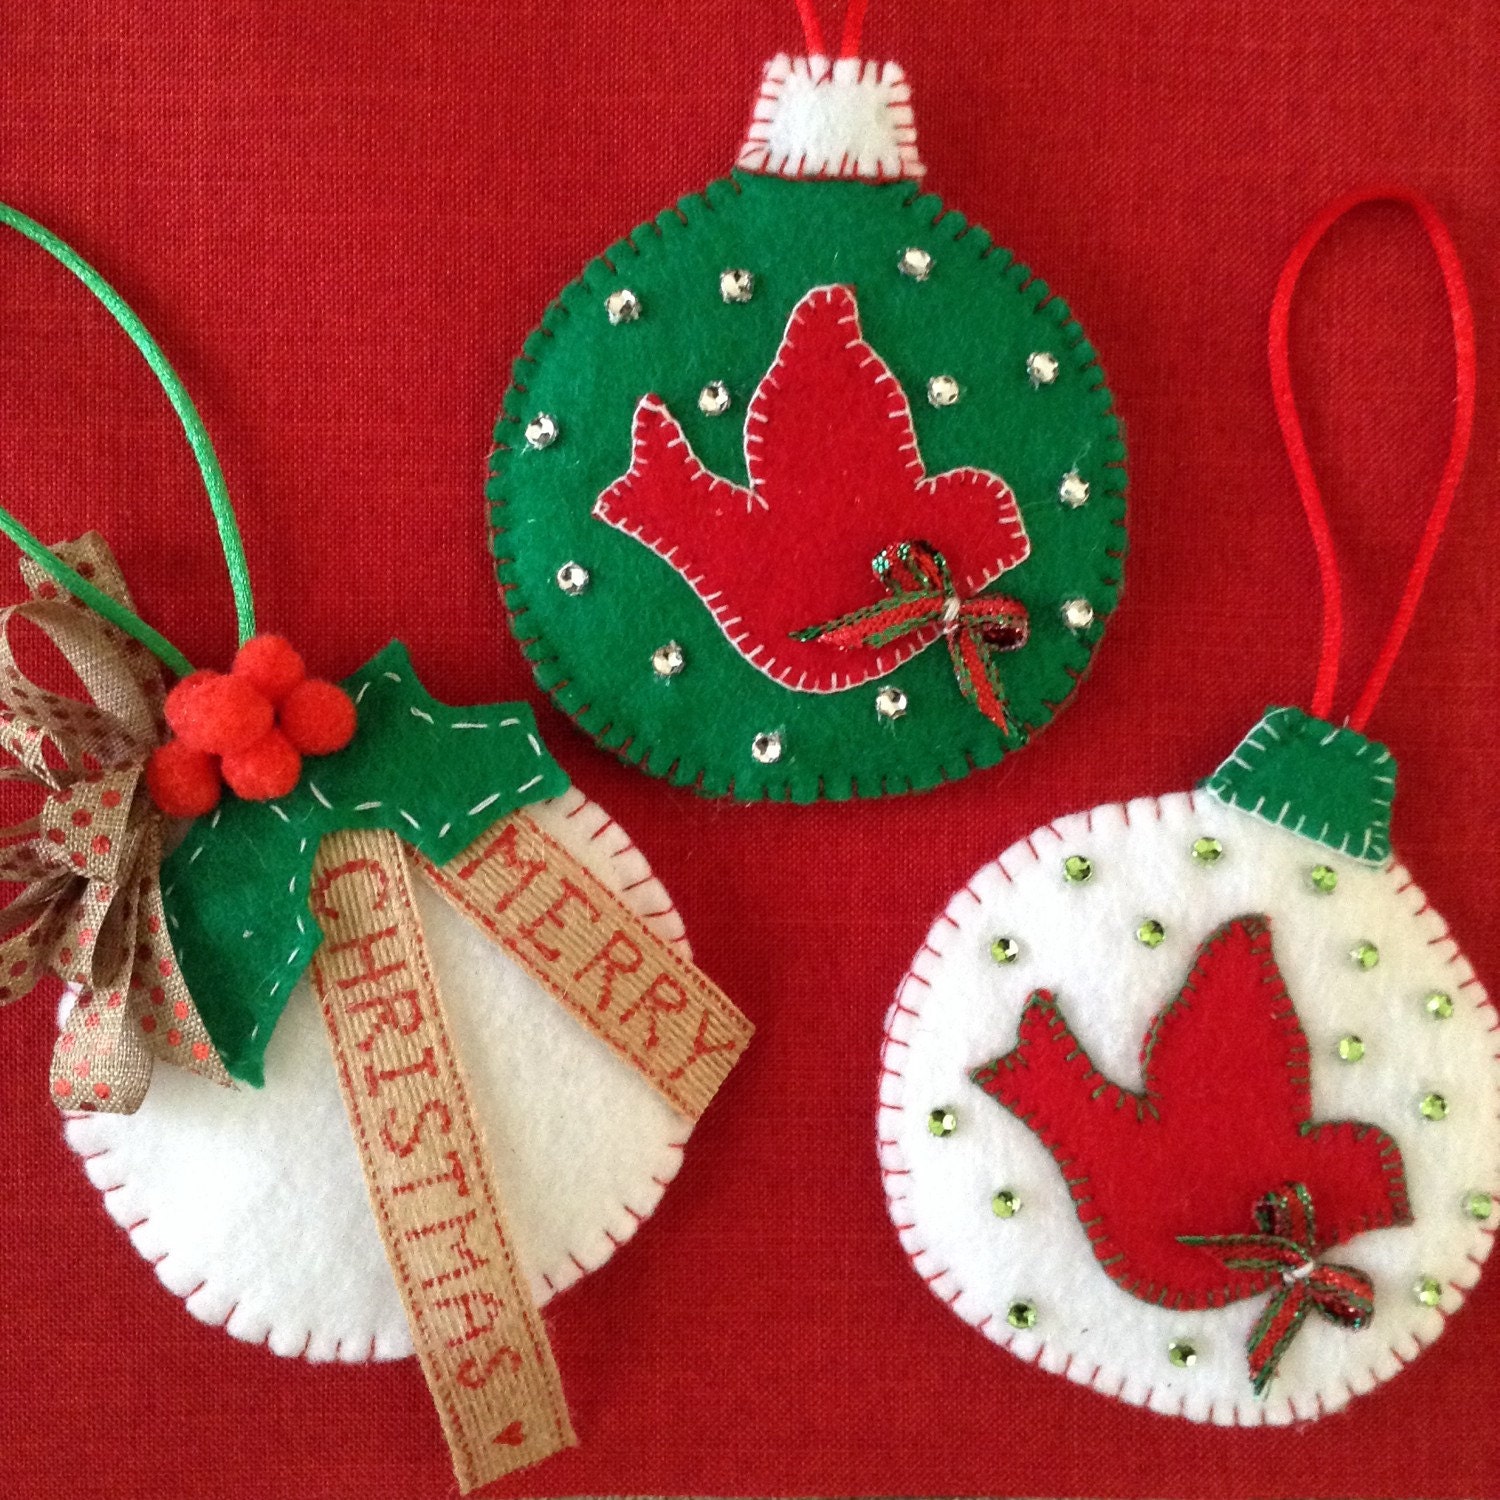 Christmas handmade felt ornaments ( set of 3 ) design and decor with cute details